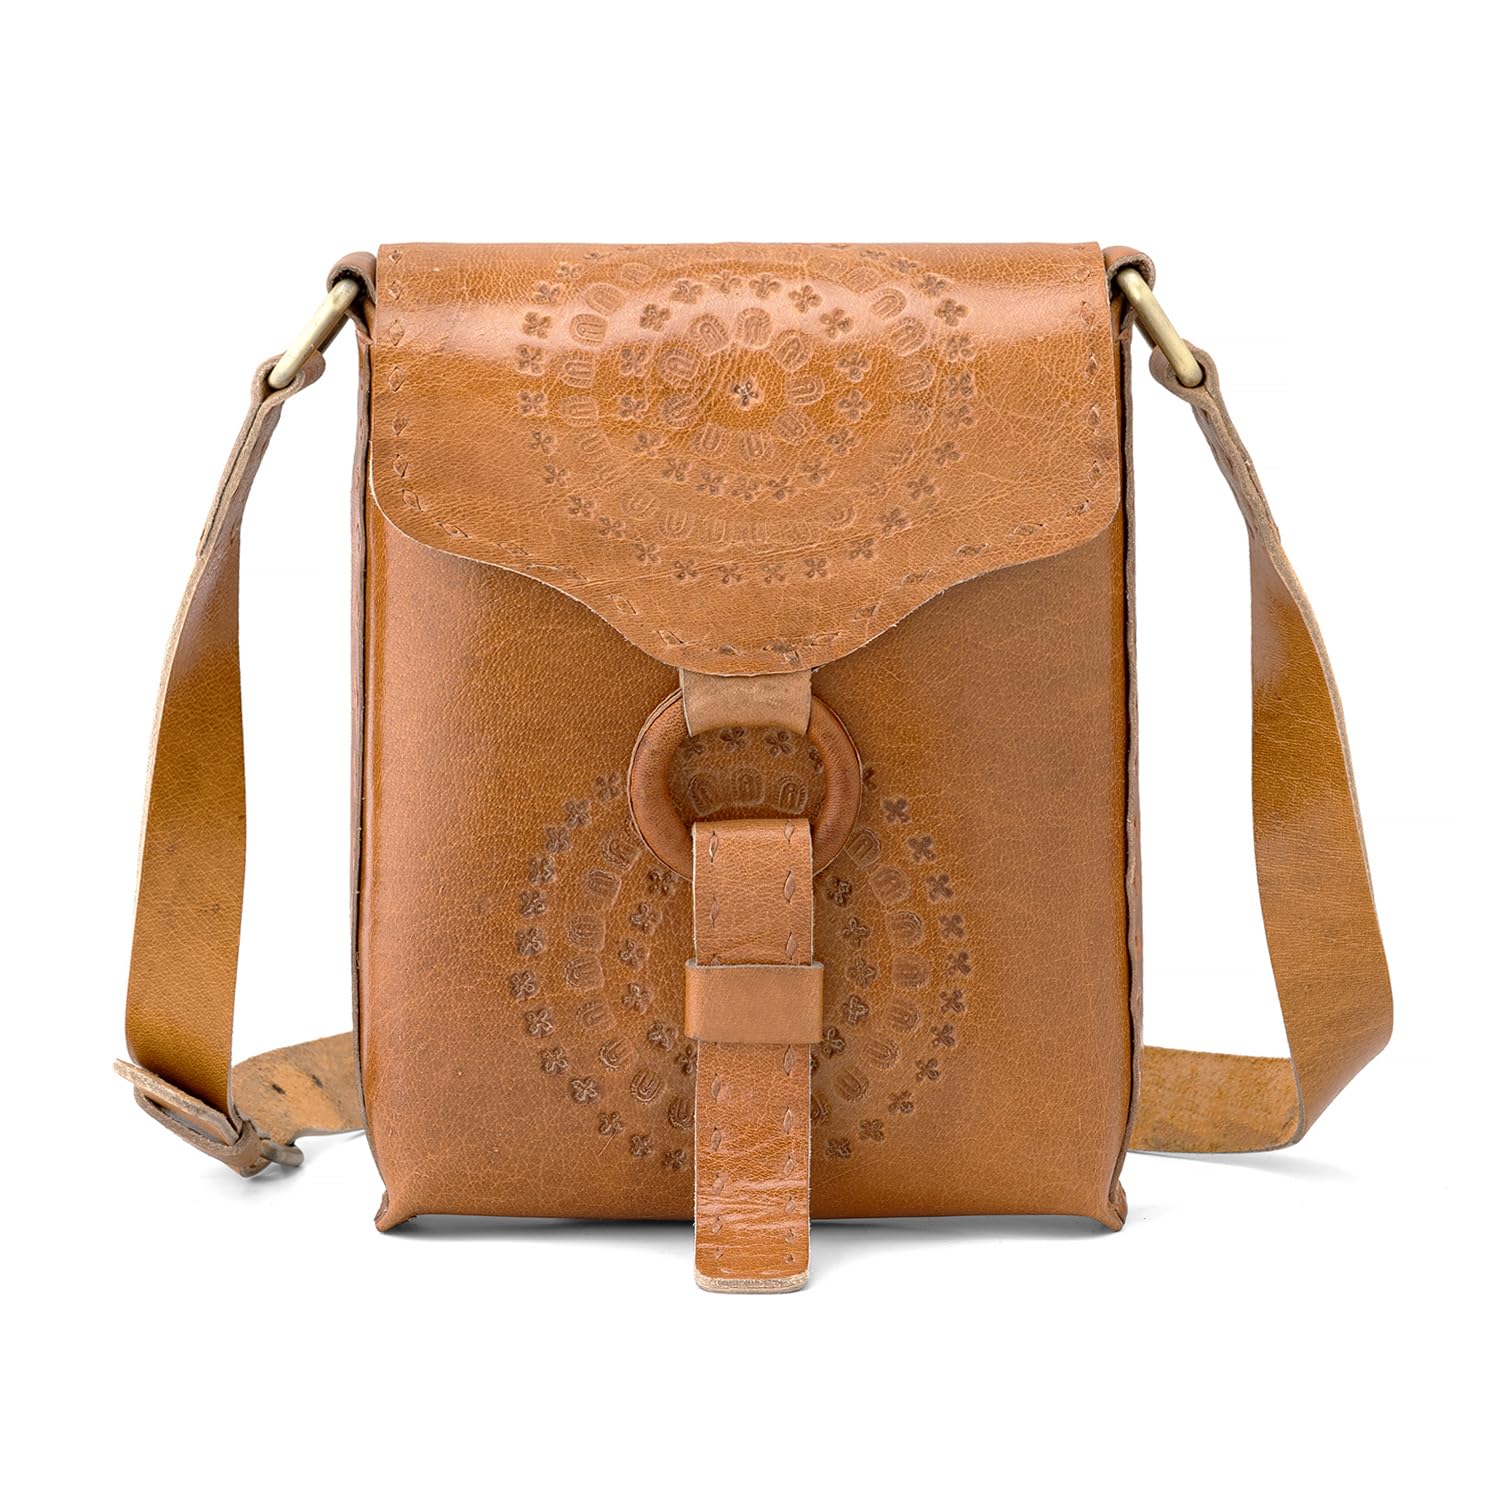 Handbag for Women and Girls | Leather Handbag | Get up to 60%